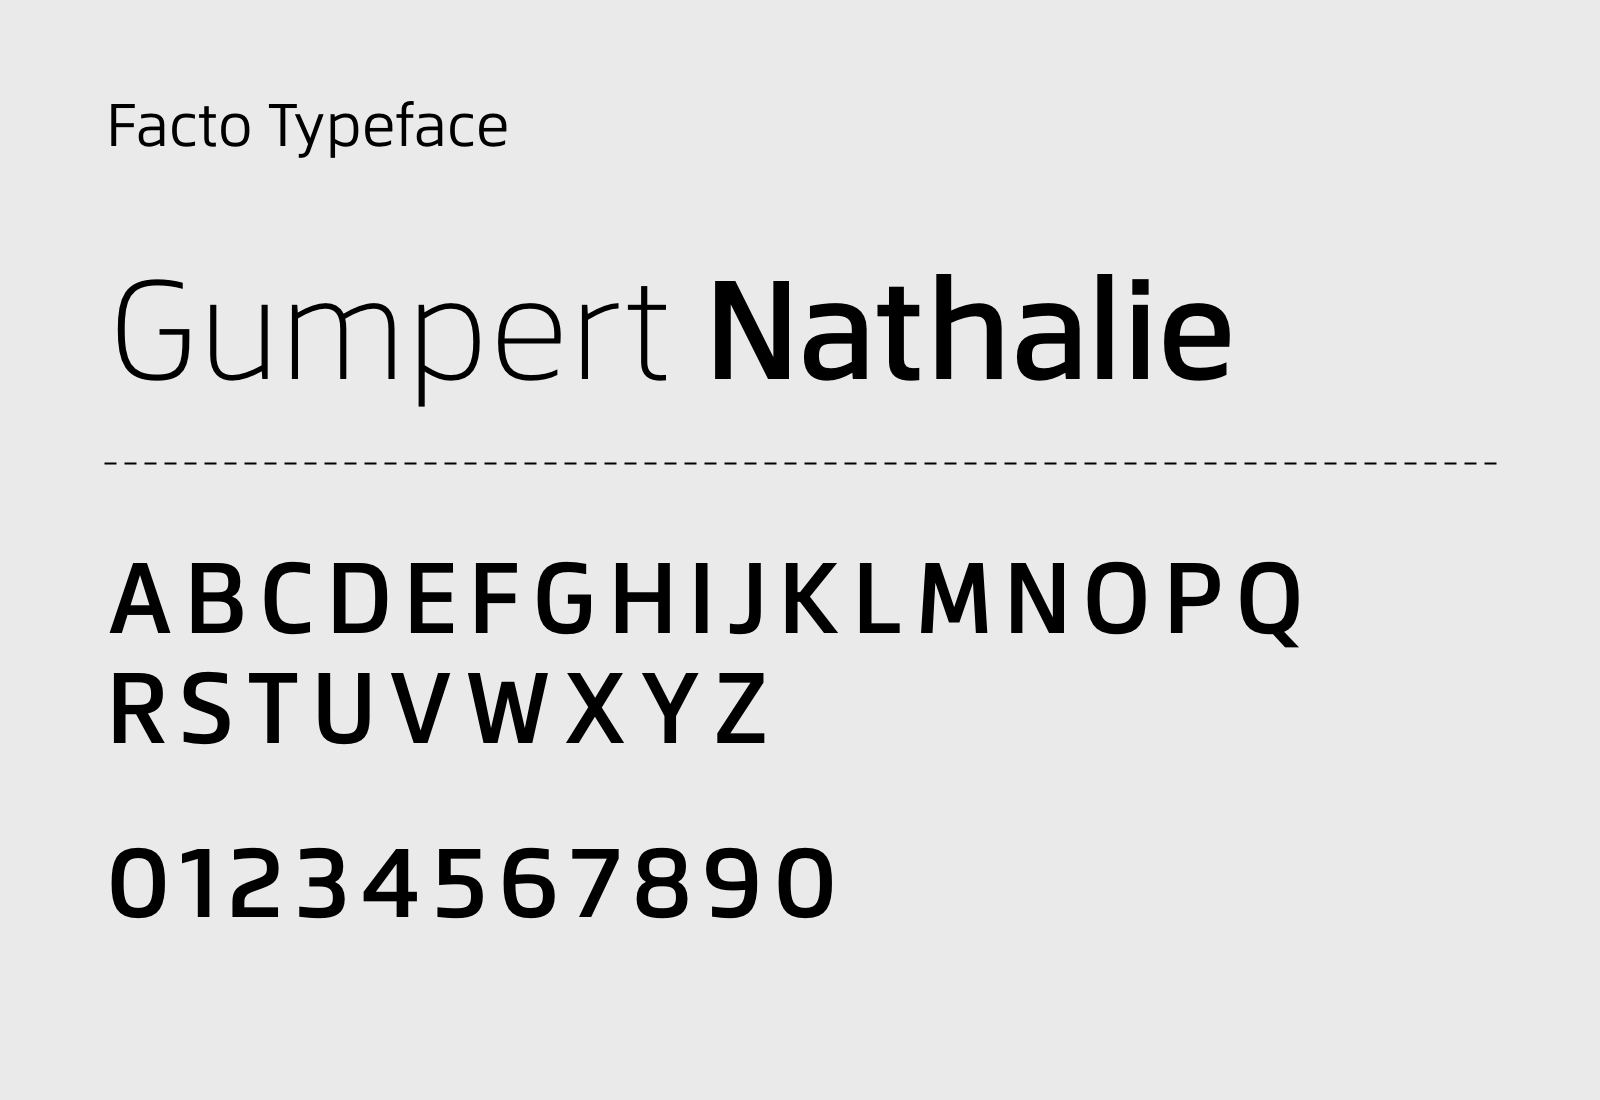 Nathalie Gumpert Typeface - Facto